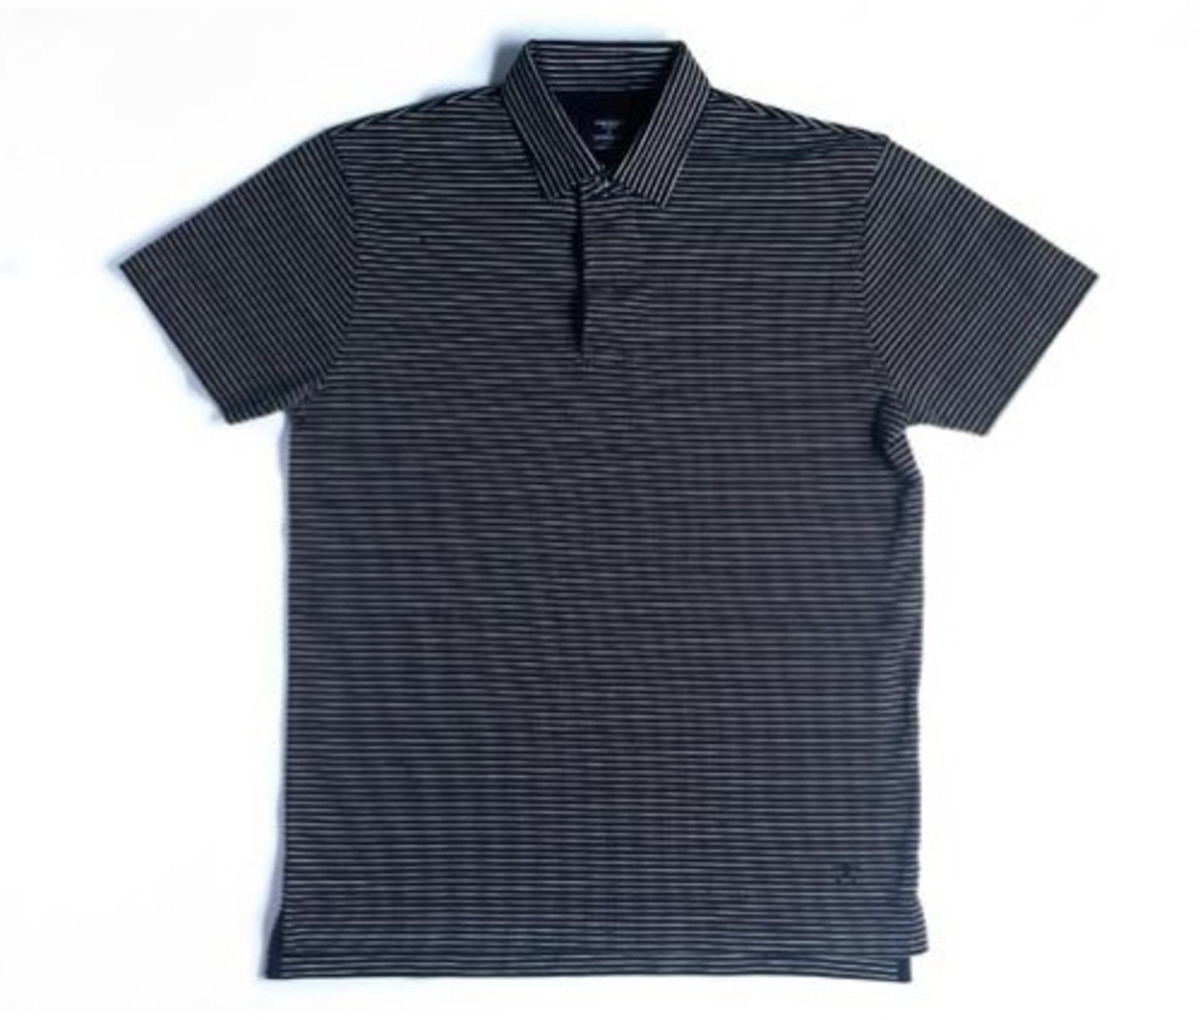 Monocle x Hackett Polo Shirt - Acquire